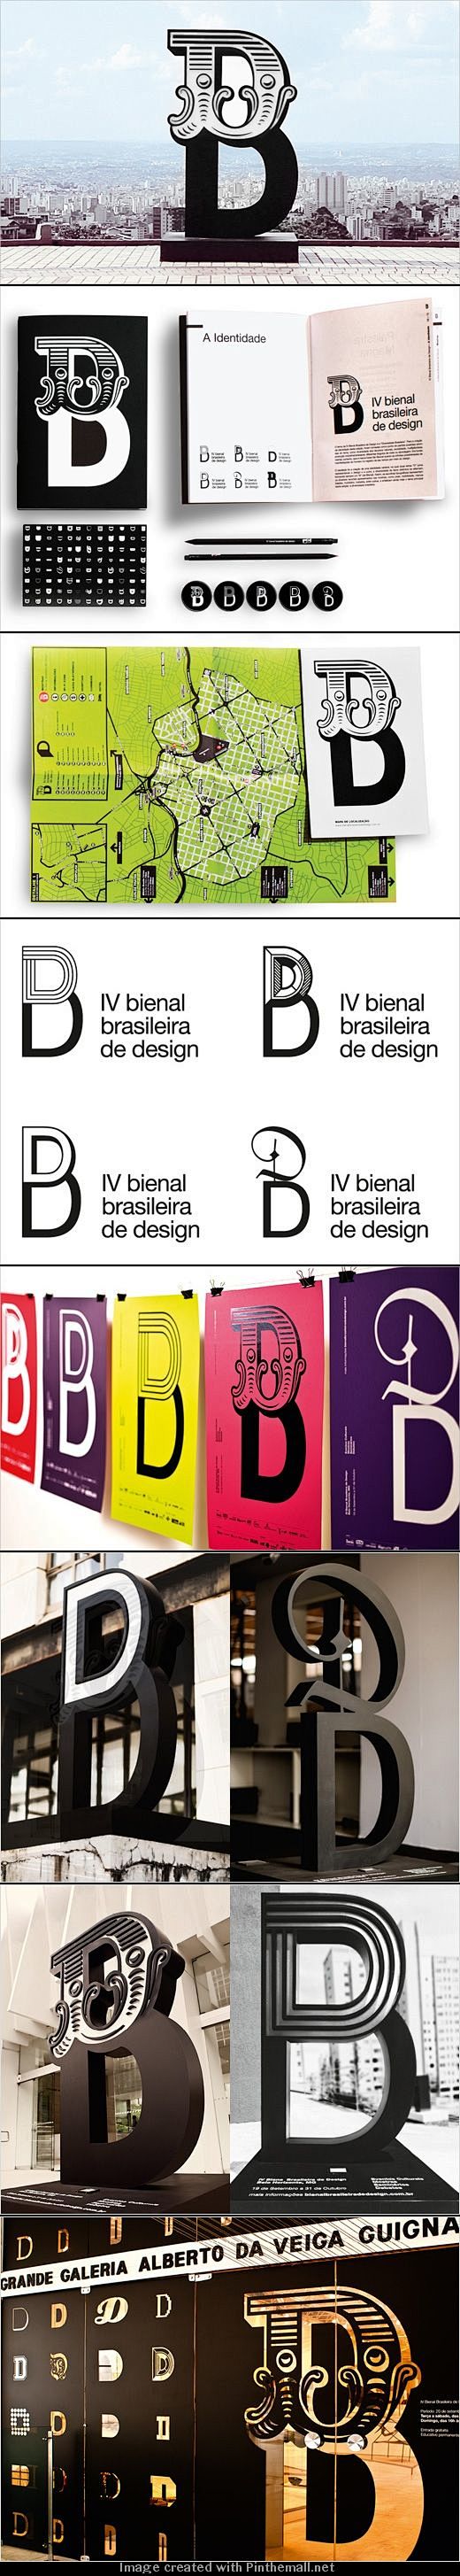 Brazil’s 4th Design ...